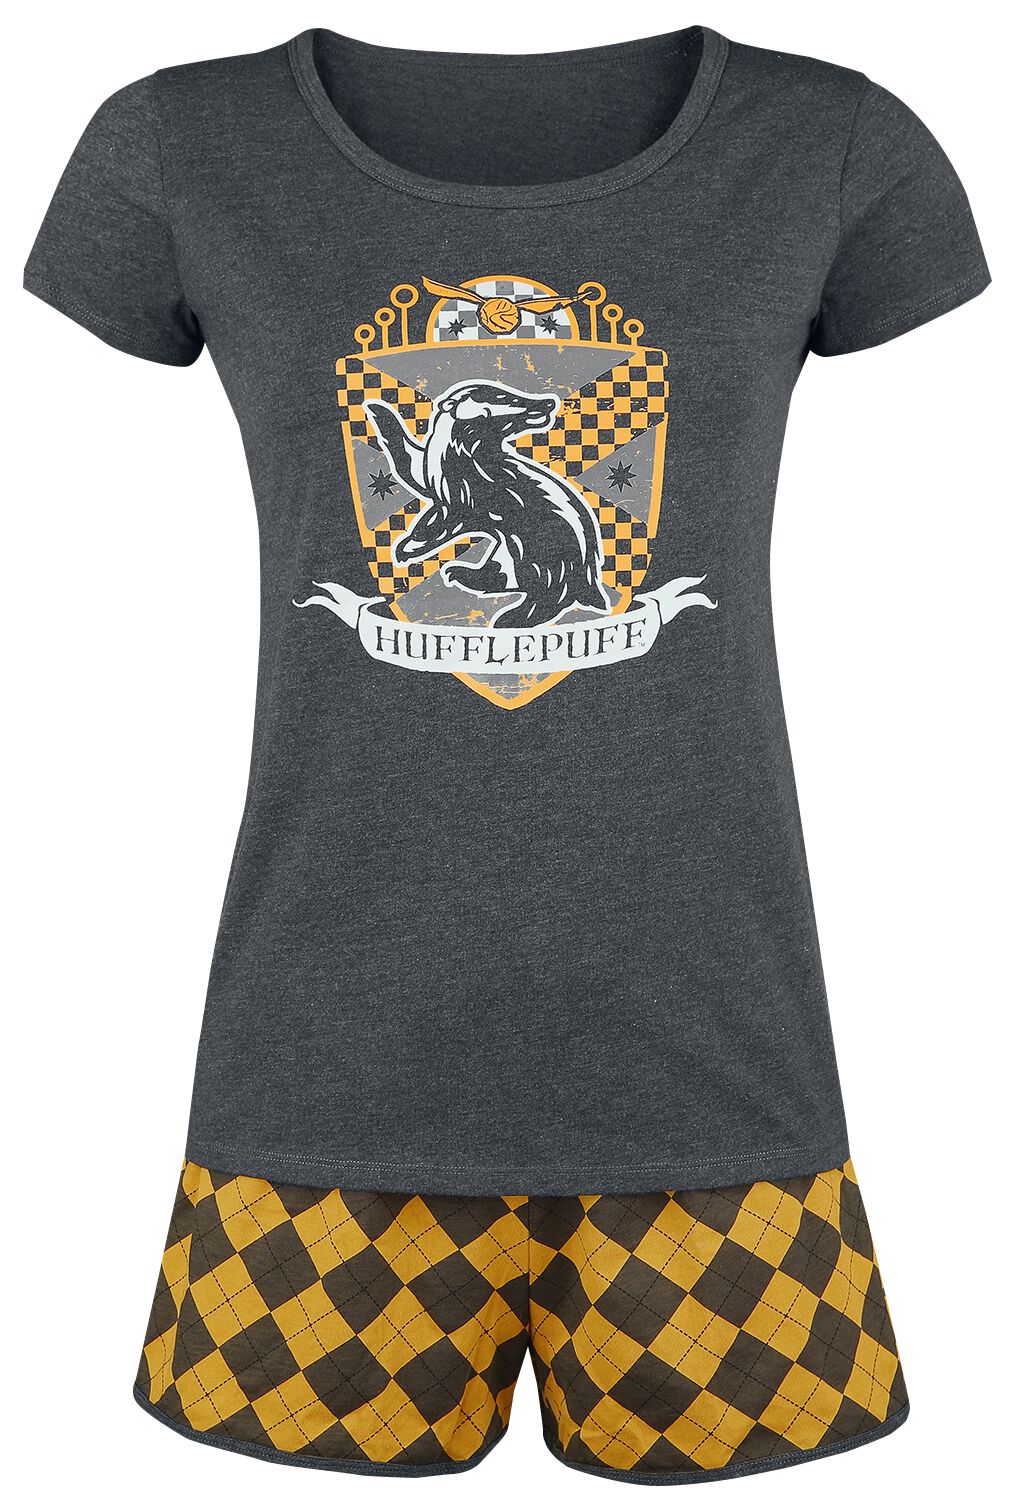 Pyjama de Harry Potter - Hufflepuff Quidditch - S - pour Femme - gris/jaune